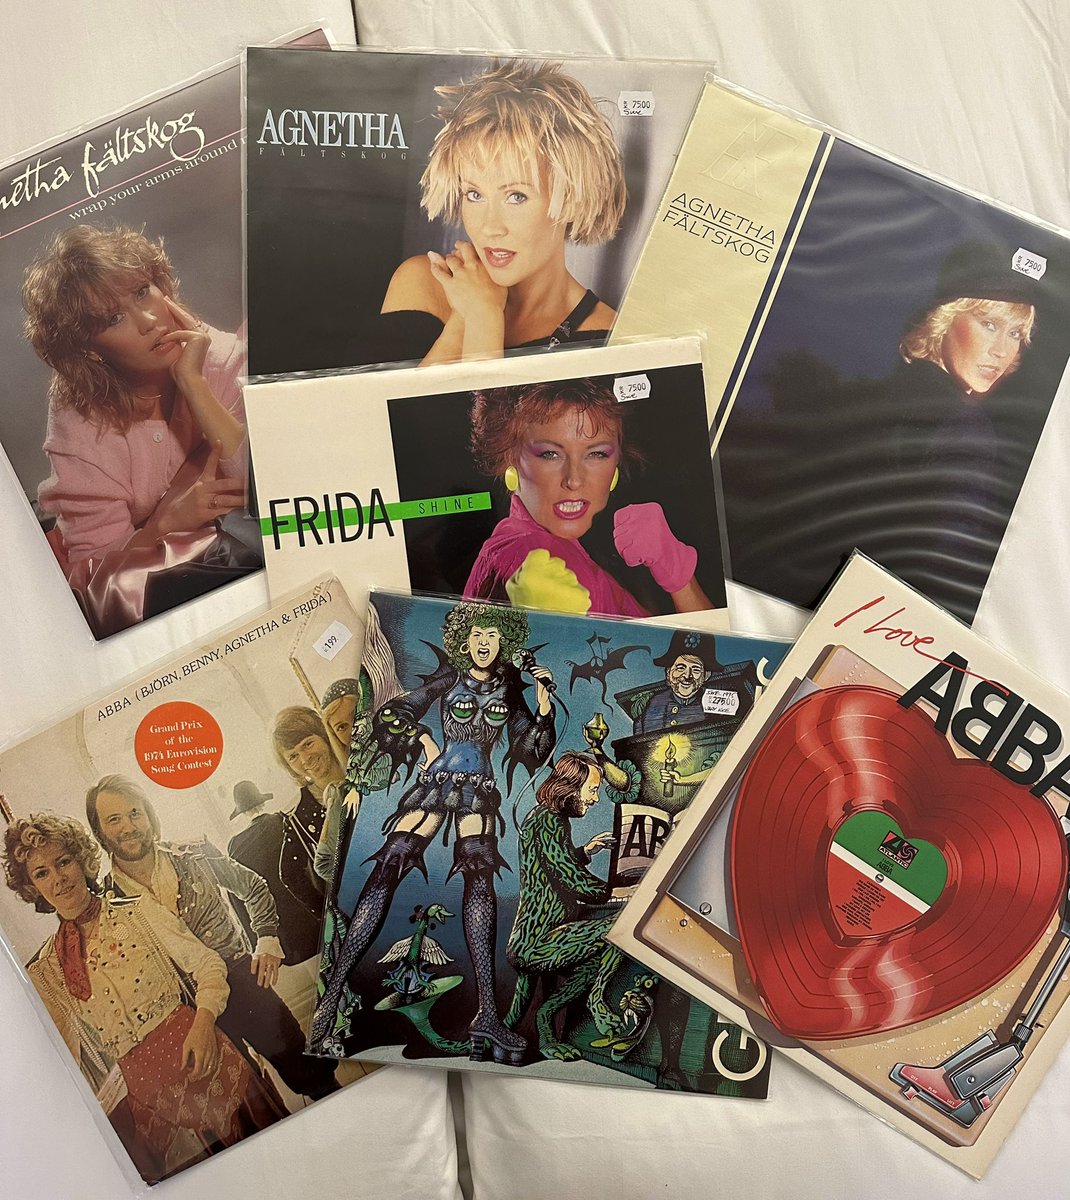 Vintage vinyl shopping whilst visiting Stockholm… #ABBA #vinylrecords #VintageVinyl #VintageRecords #Albums #AgnethaFältskog #AnnifridLyngstad @ABBA